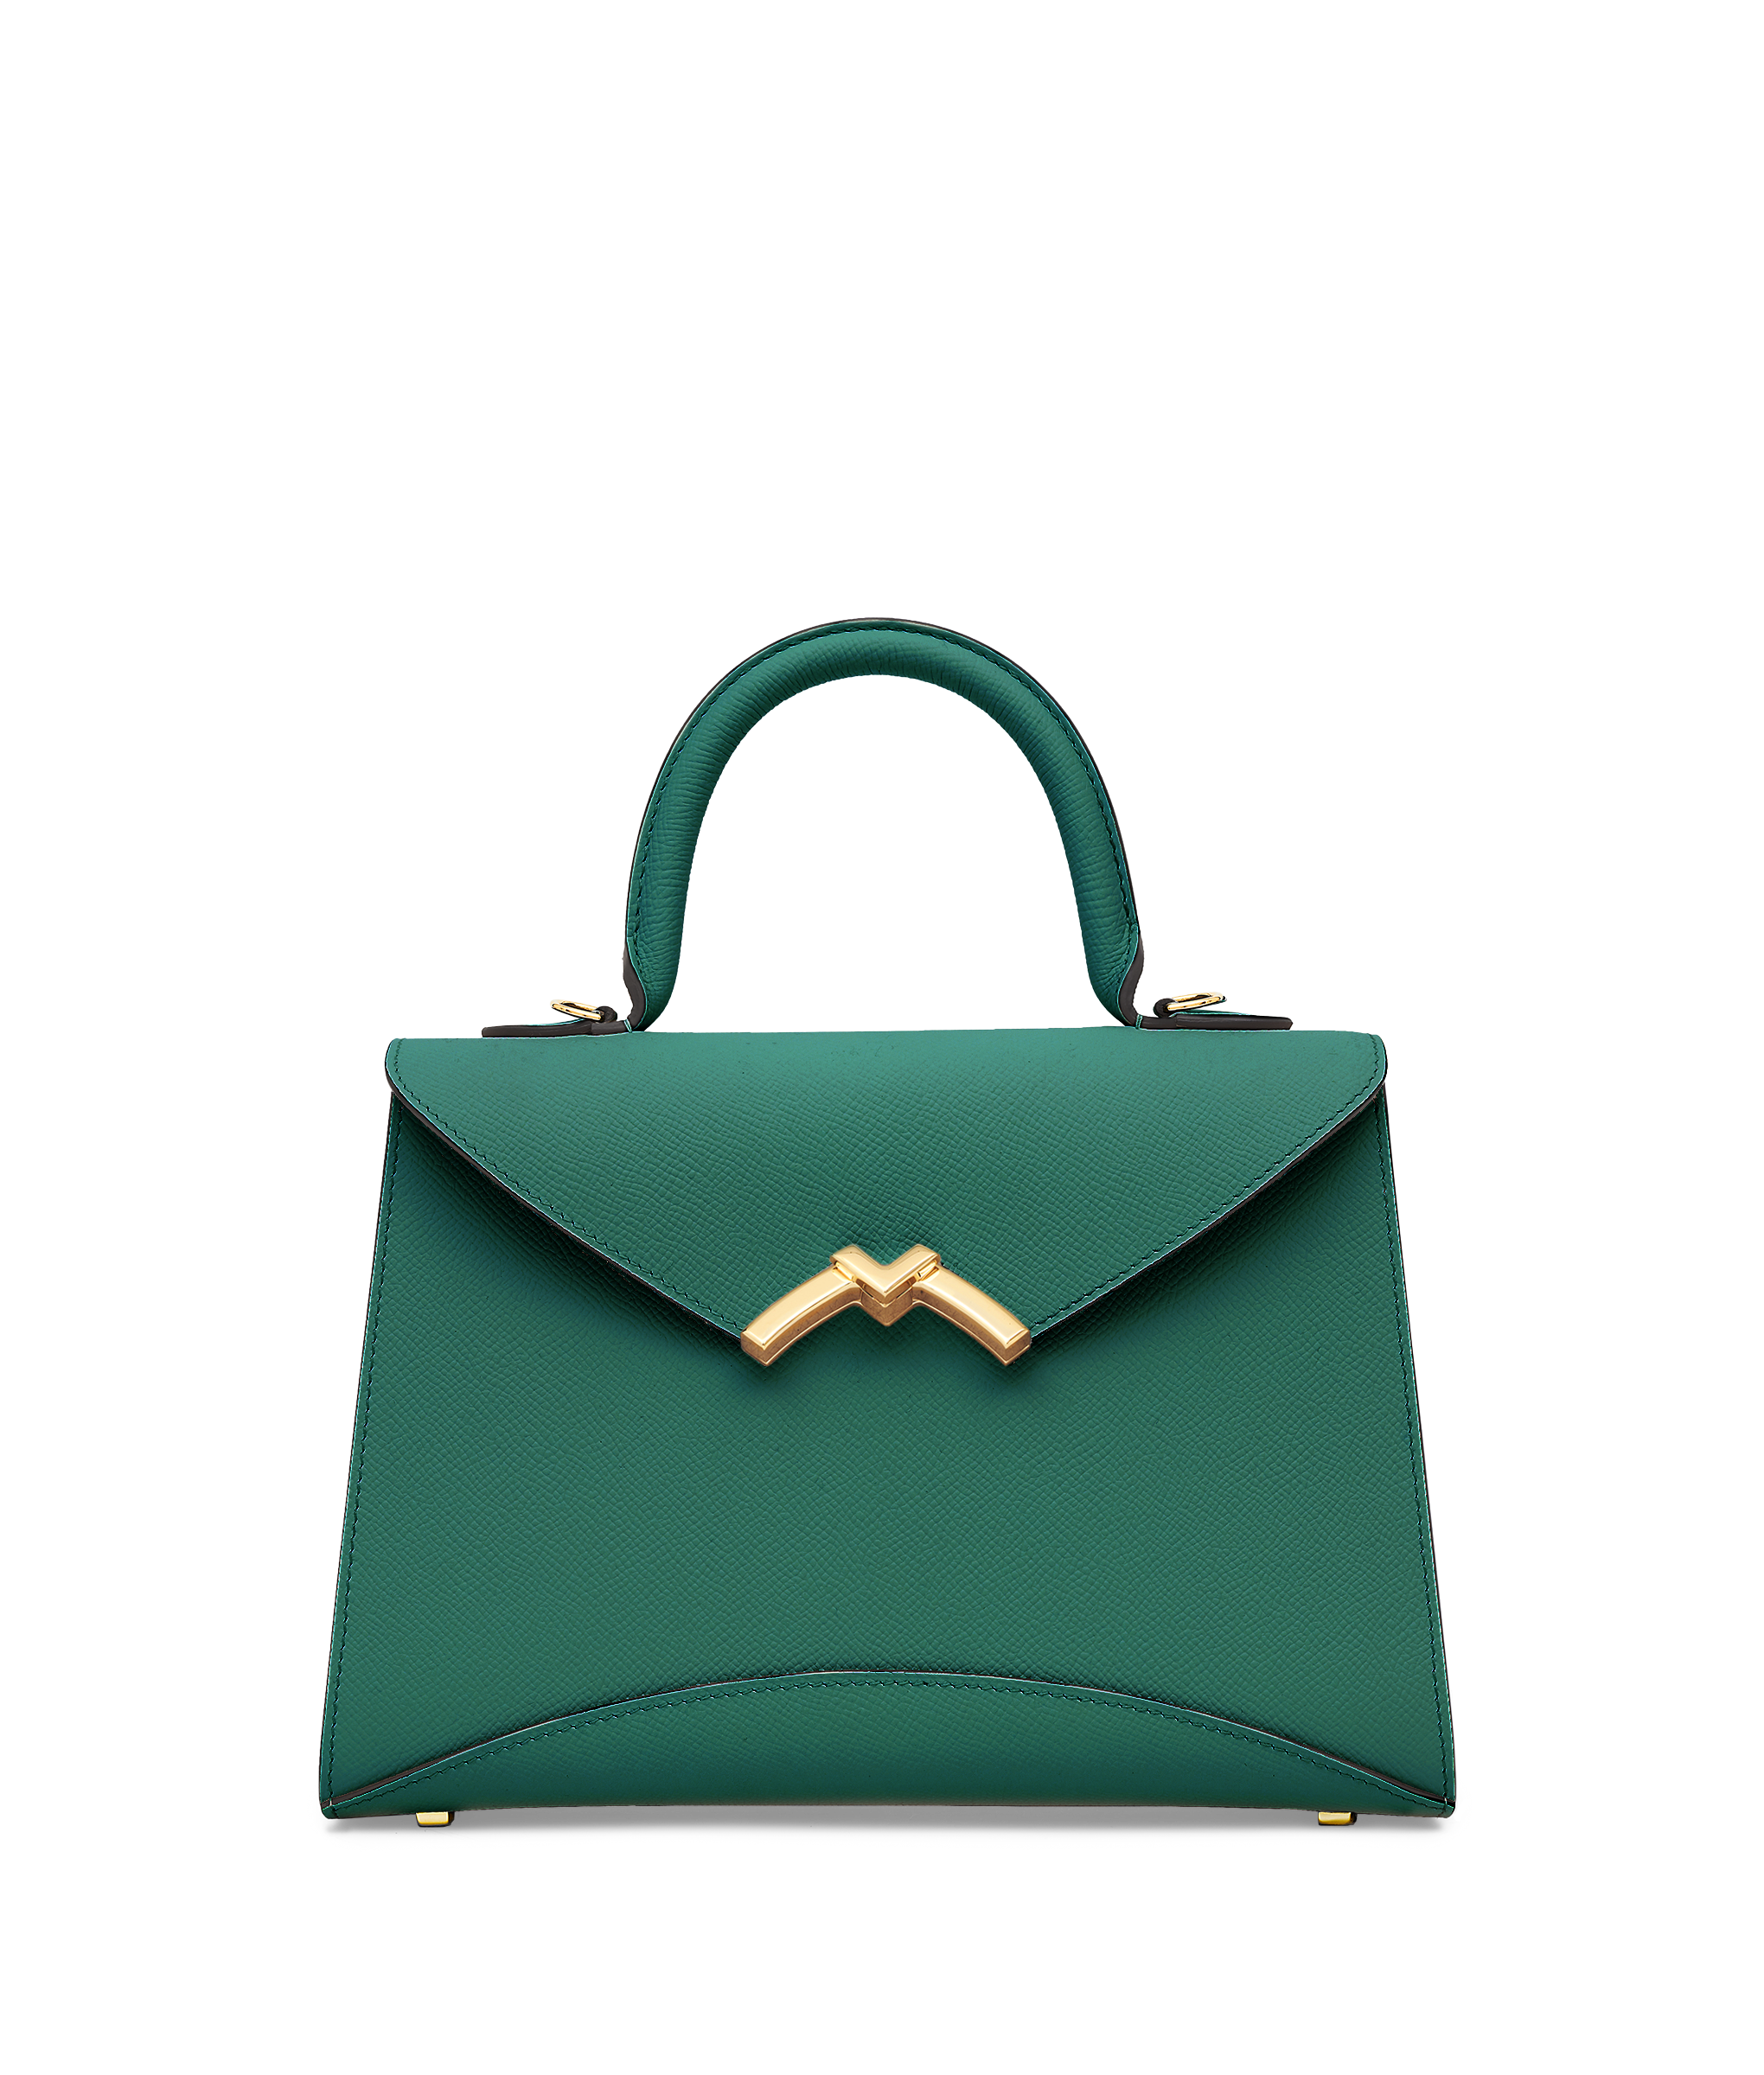 Moynat Paris - Gabrielle PM Handbag - Grey - in Leather - Luxury